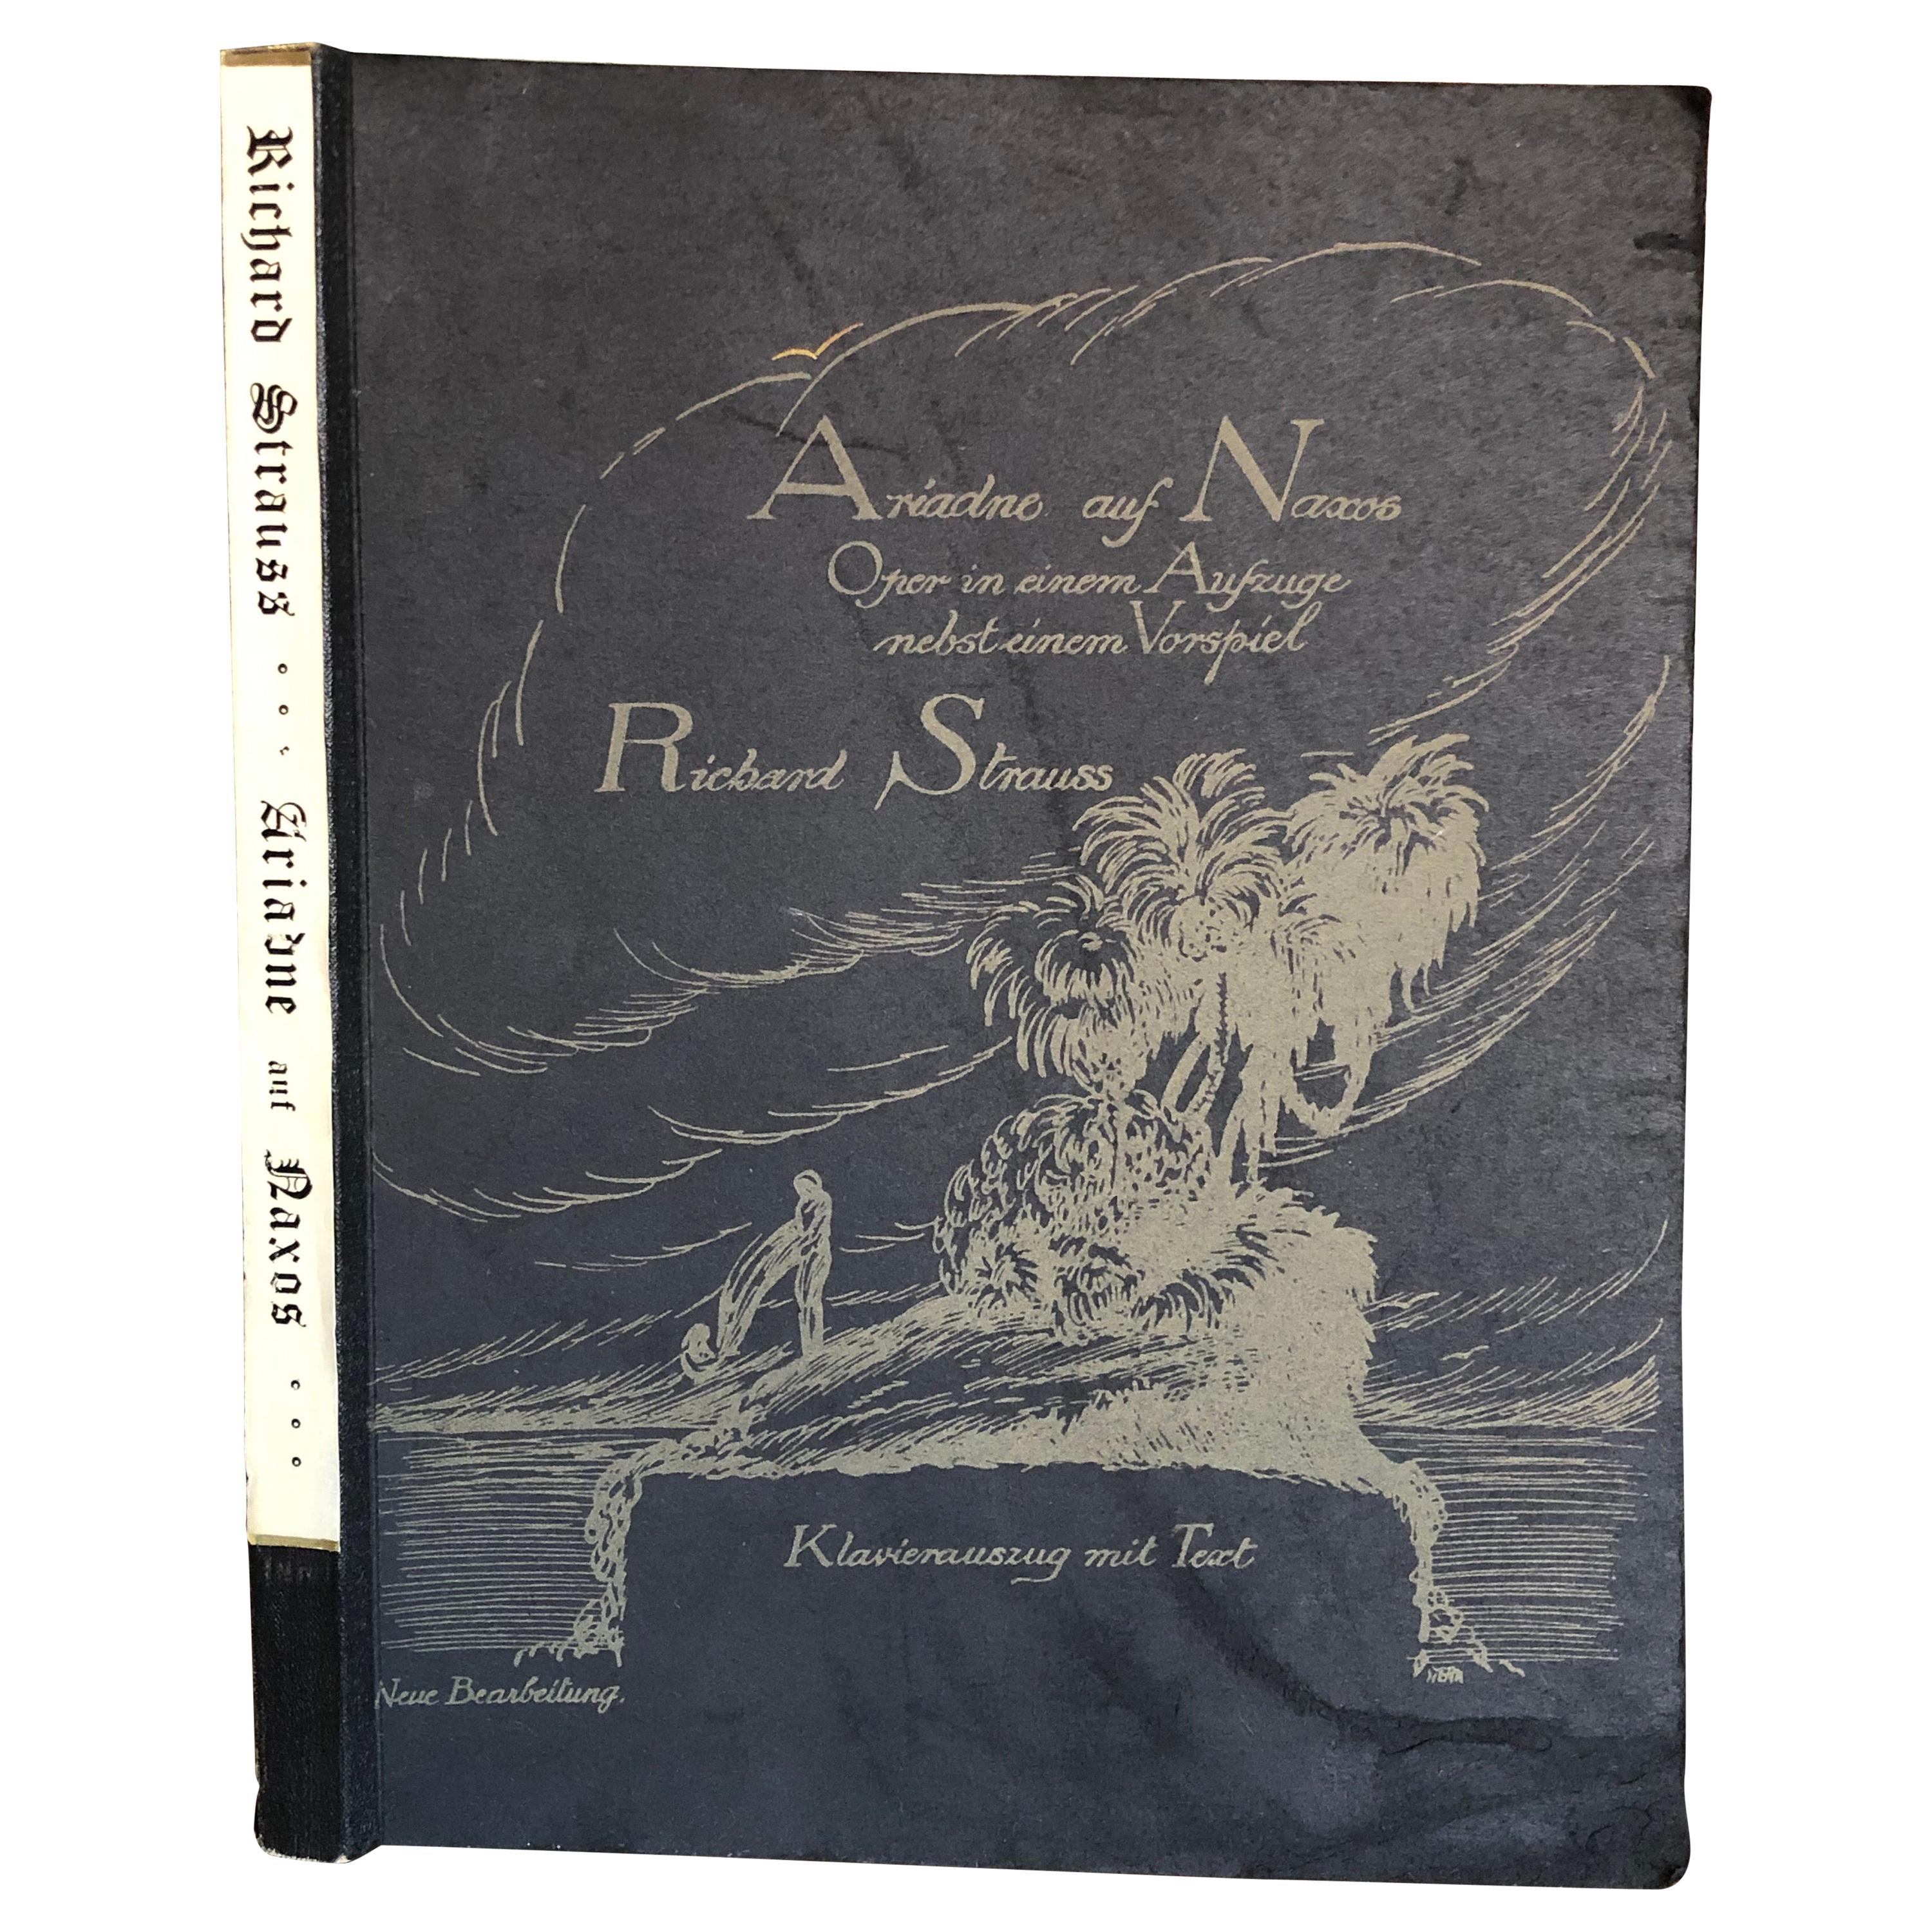 Richard Strauss Opera 'Ariadne auf Naxos' Op60, London, 1912